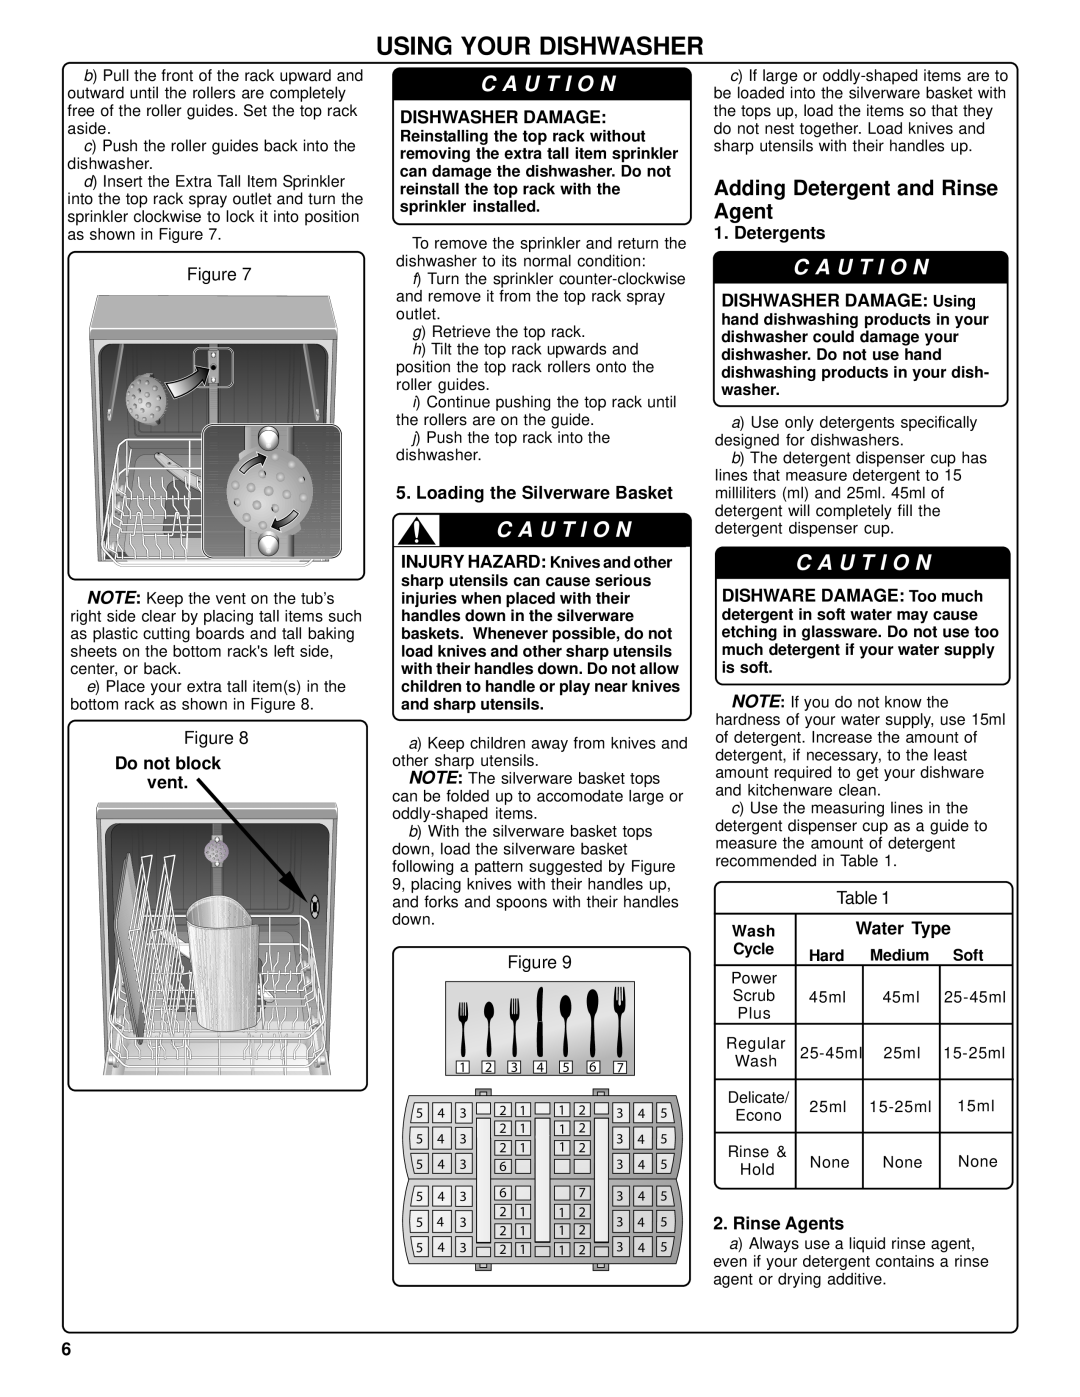 Bosch Appliances SHU42L Using Your Dishwasher, C A U T I O N, Dishwasher Damage, Detergents, Do not block vent, Wash, Hard 